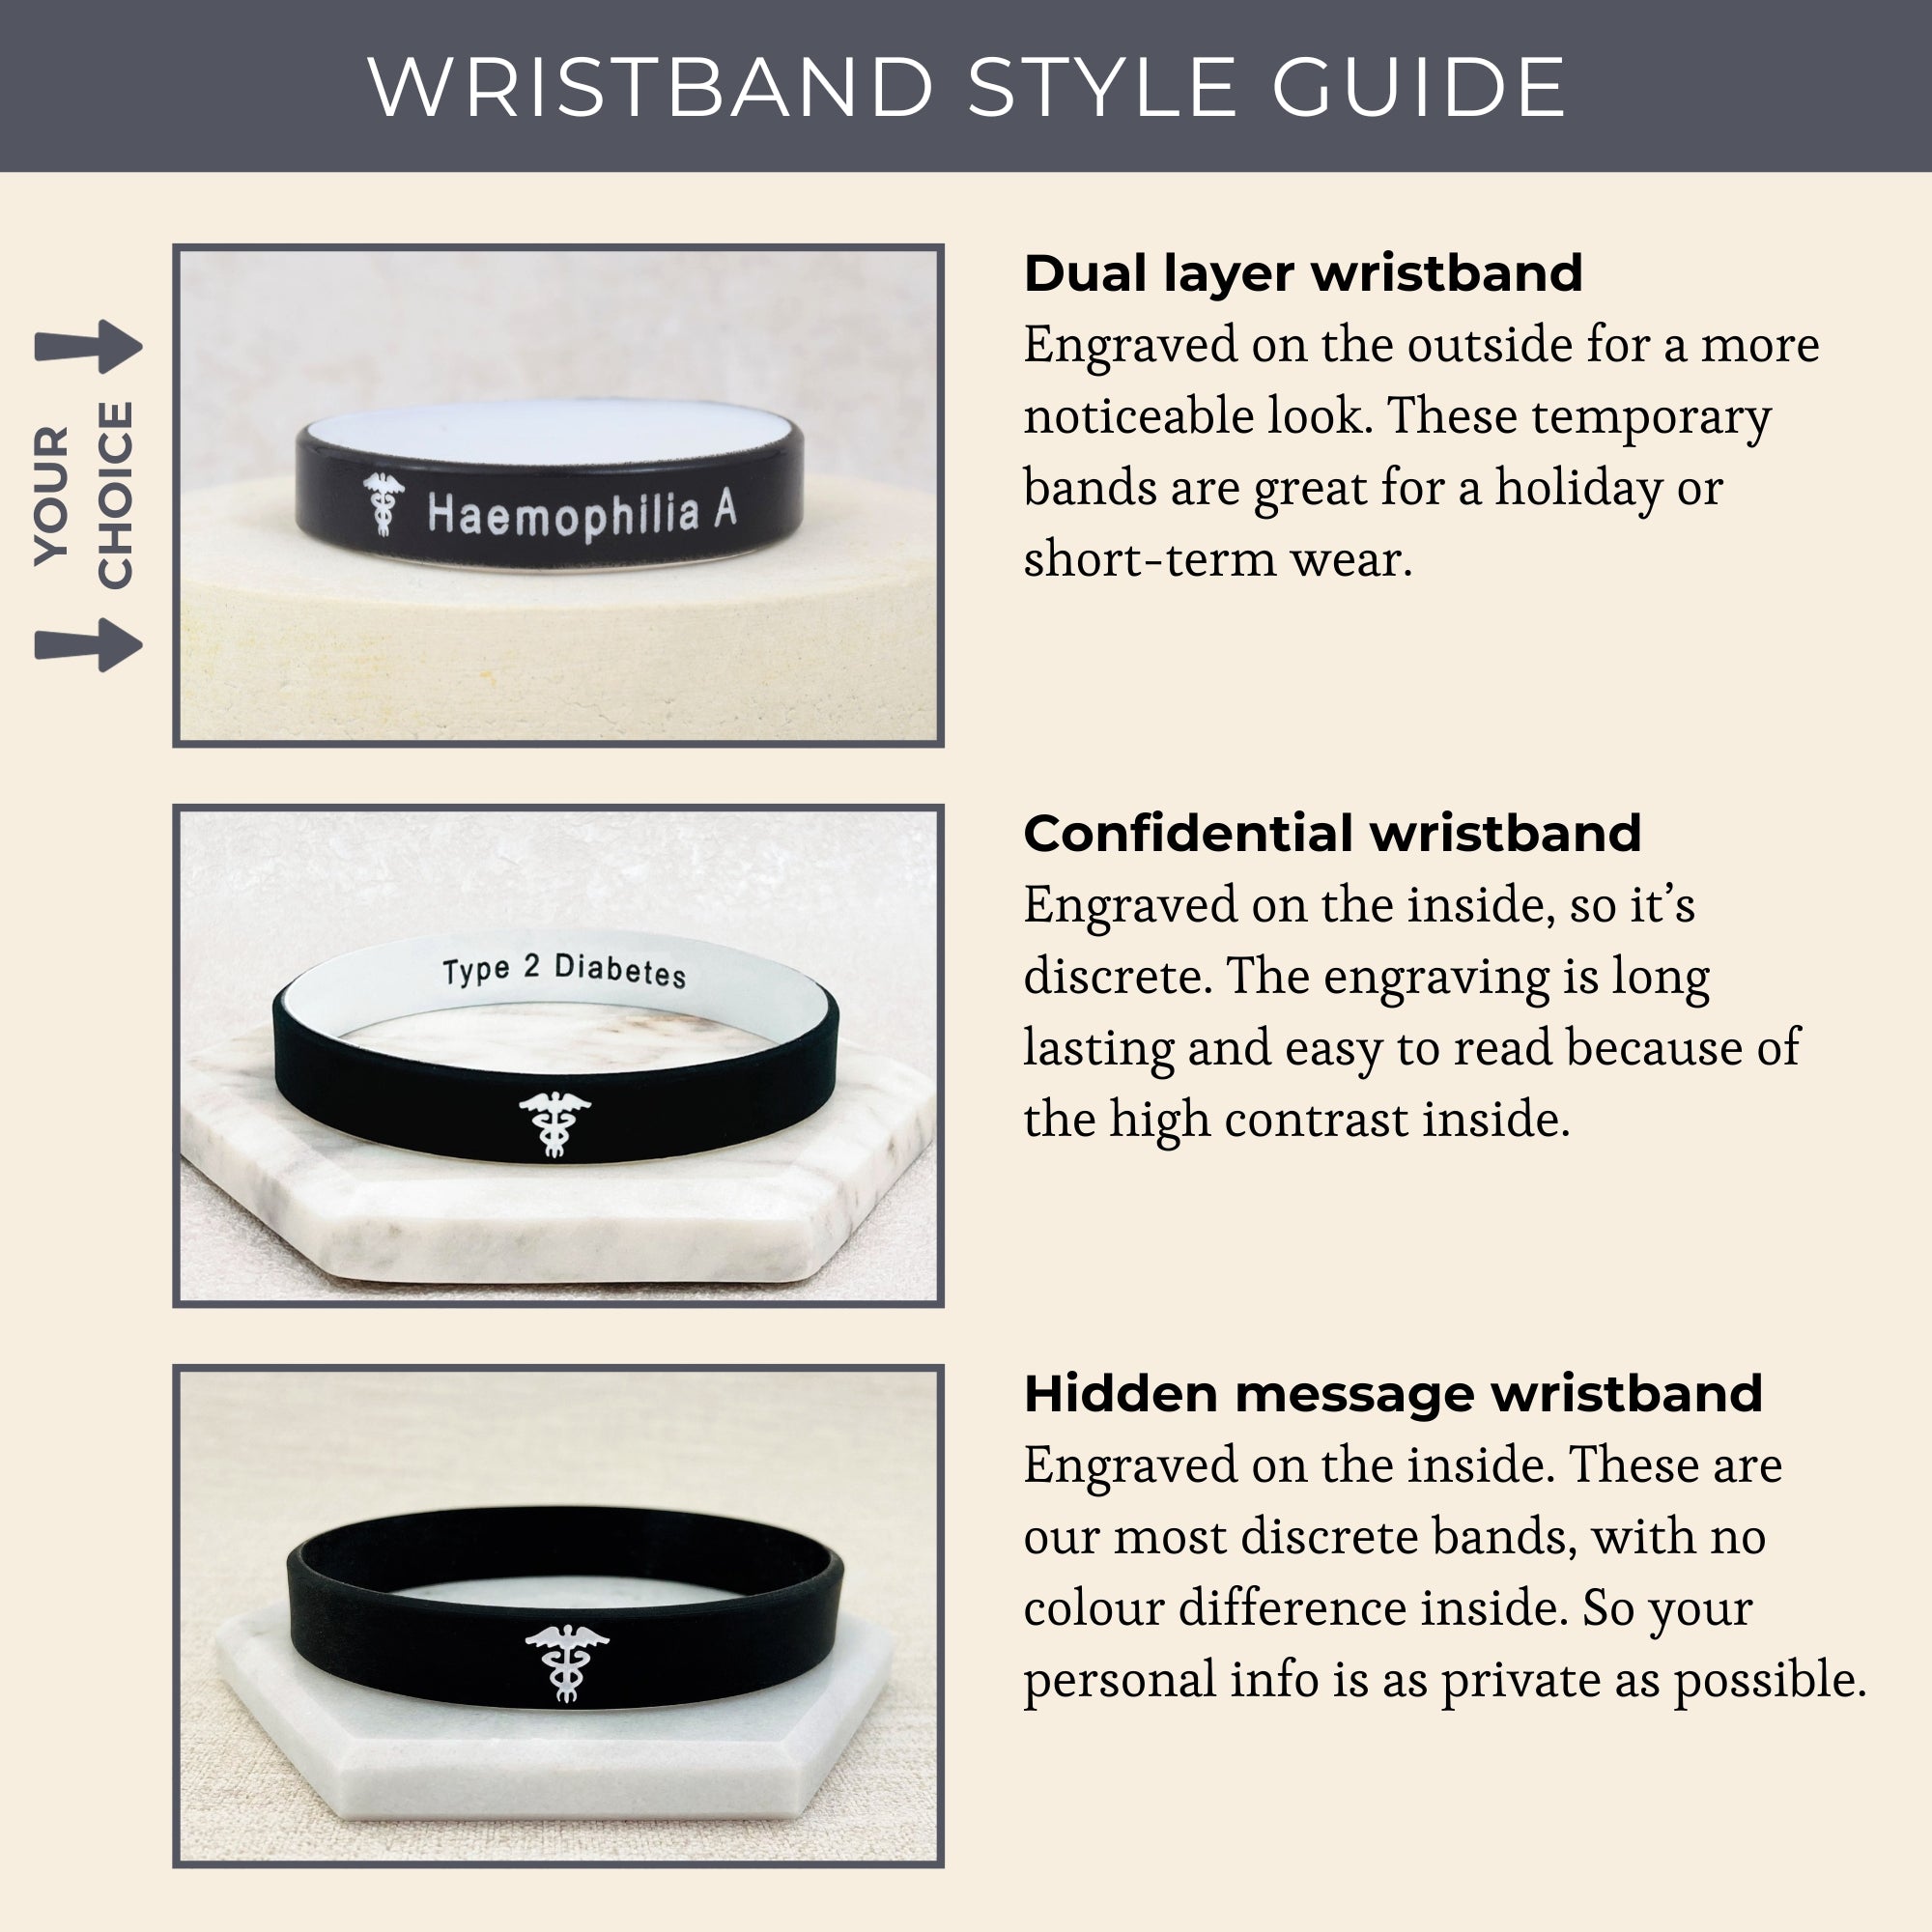 Jelly Wristbands Explained - Wristband Bros Glossary